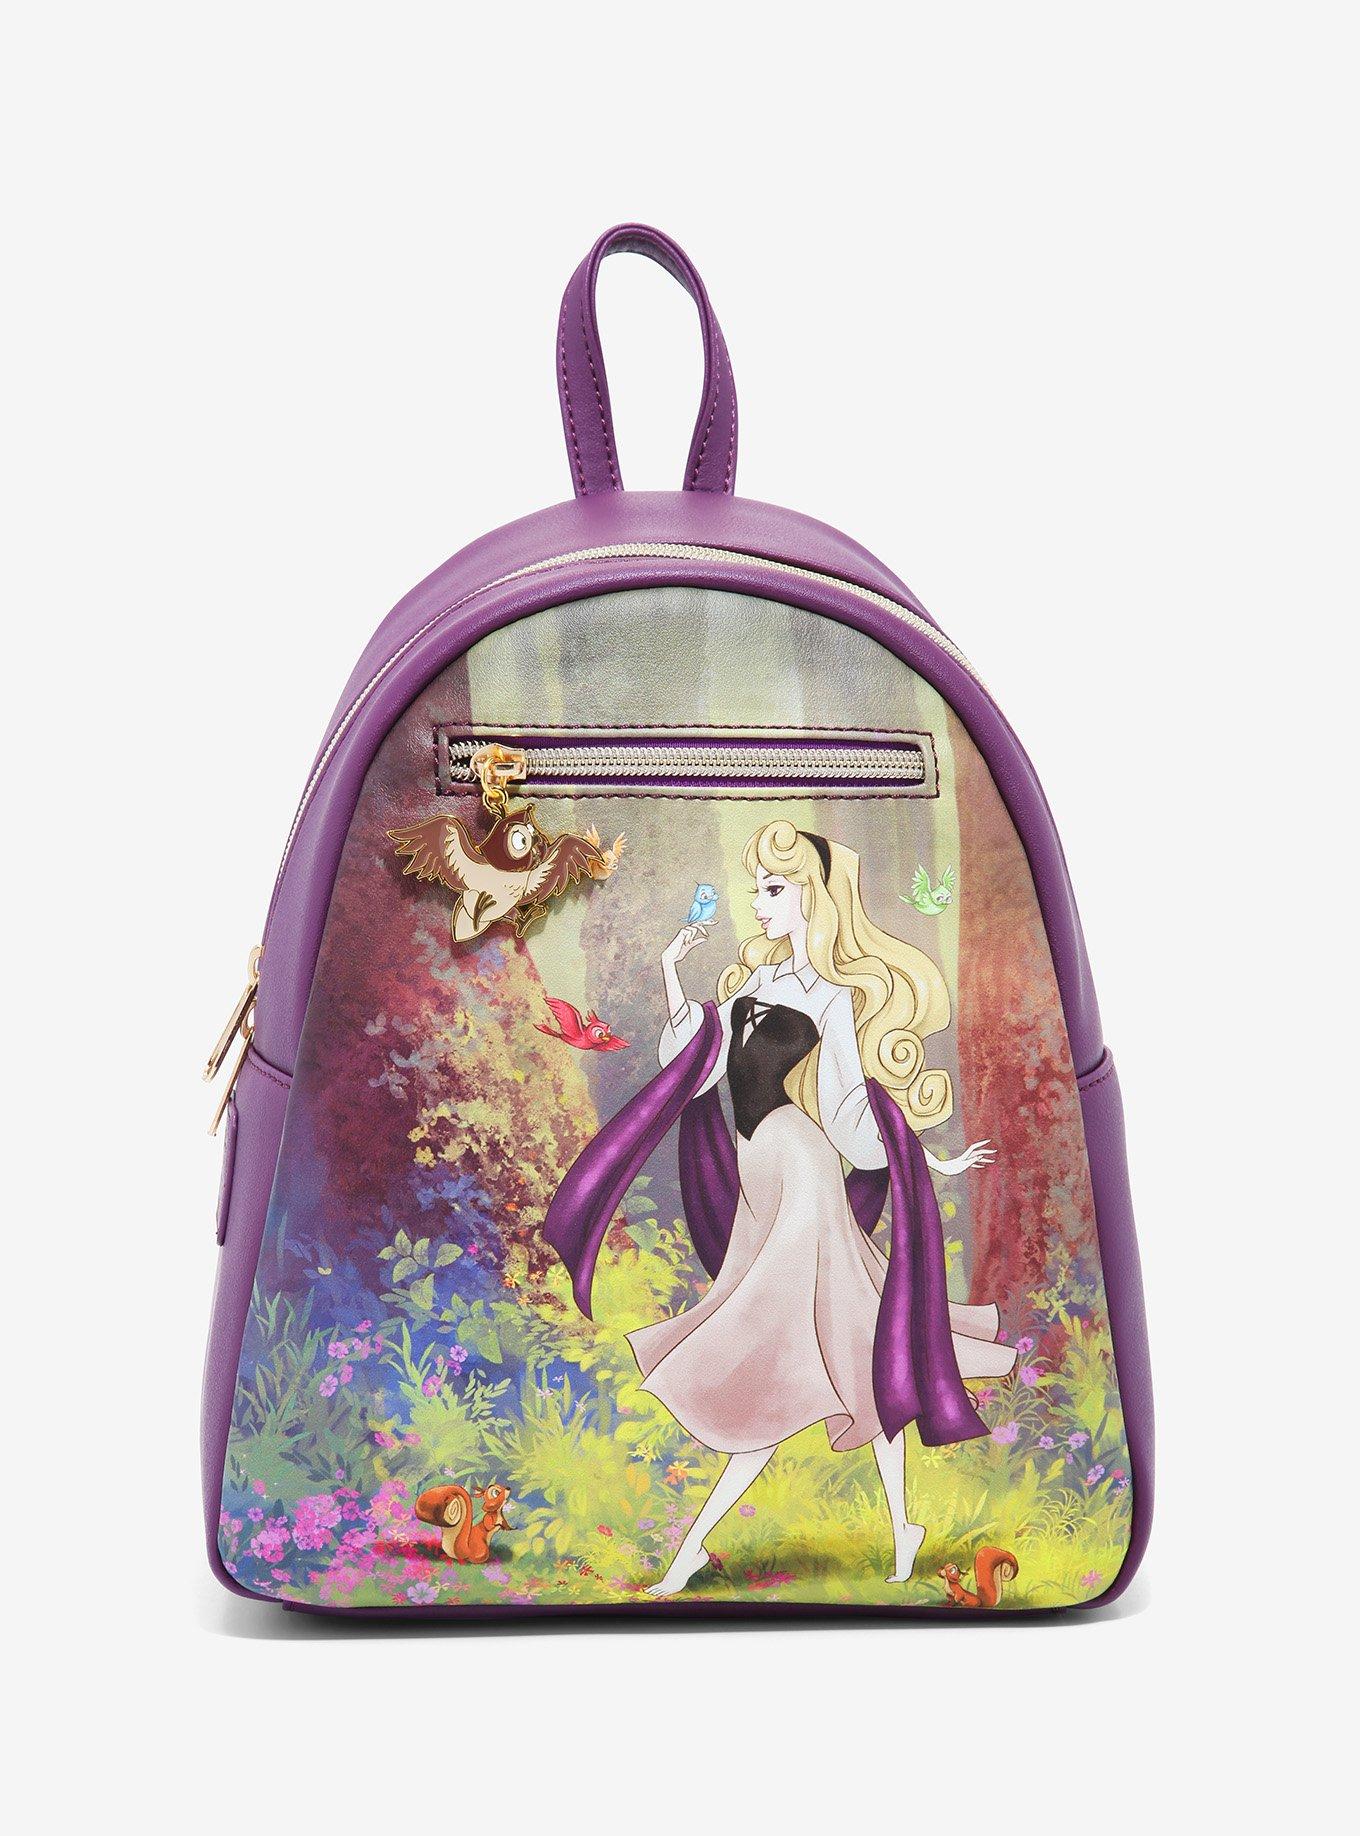 Loungefly Disney Sleeping Beauty Aurora Illustration Mini Backpack, , hi-res